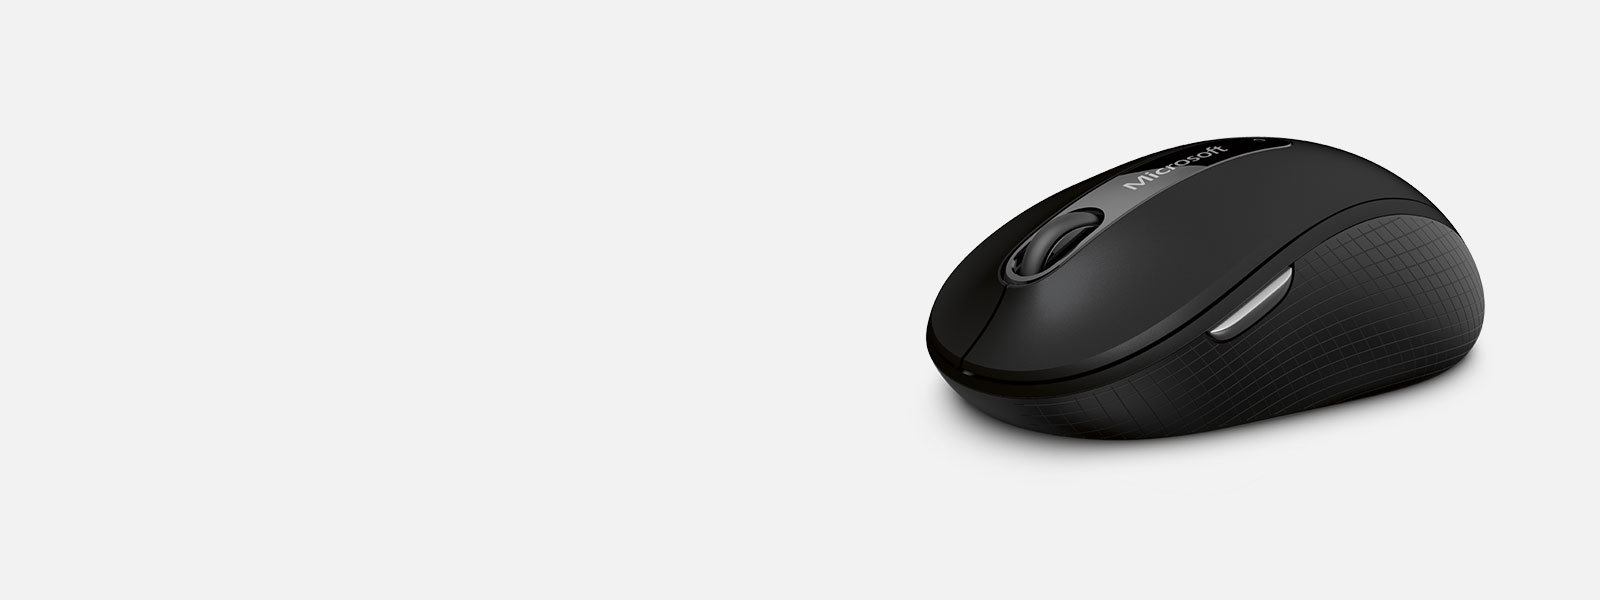 Microsoft Wireless Mouse 4000 | Microsoft Accessories